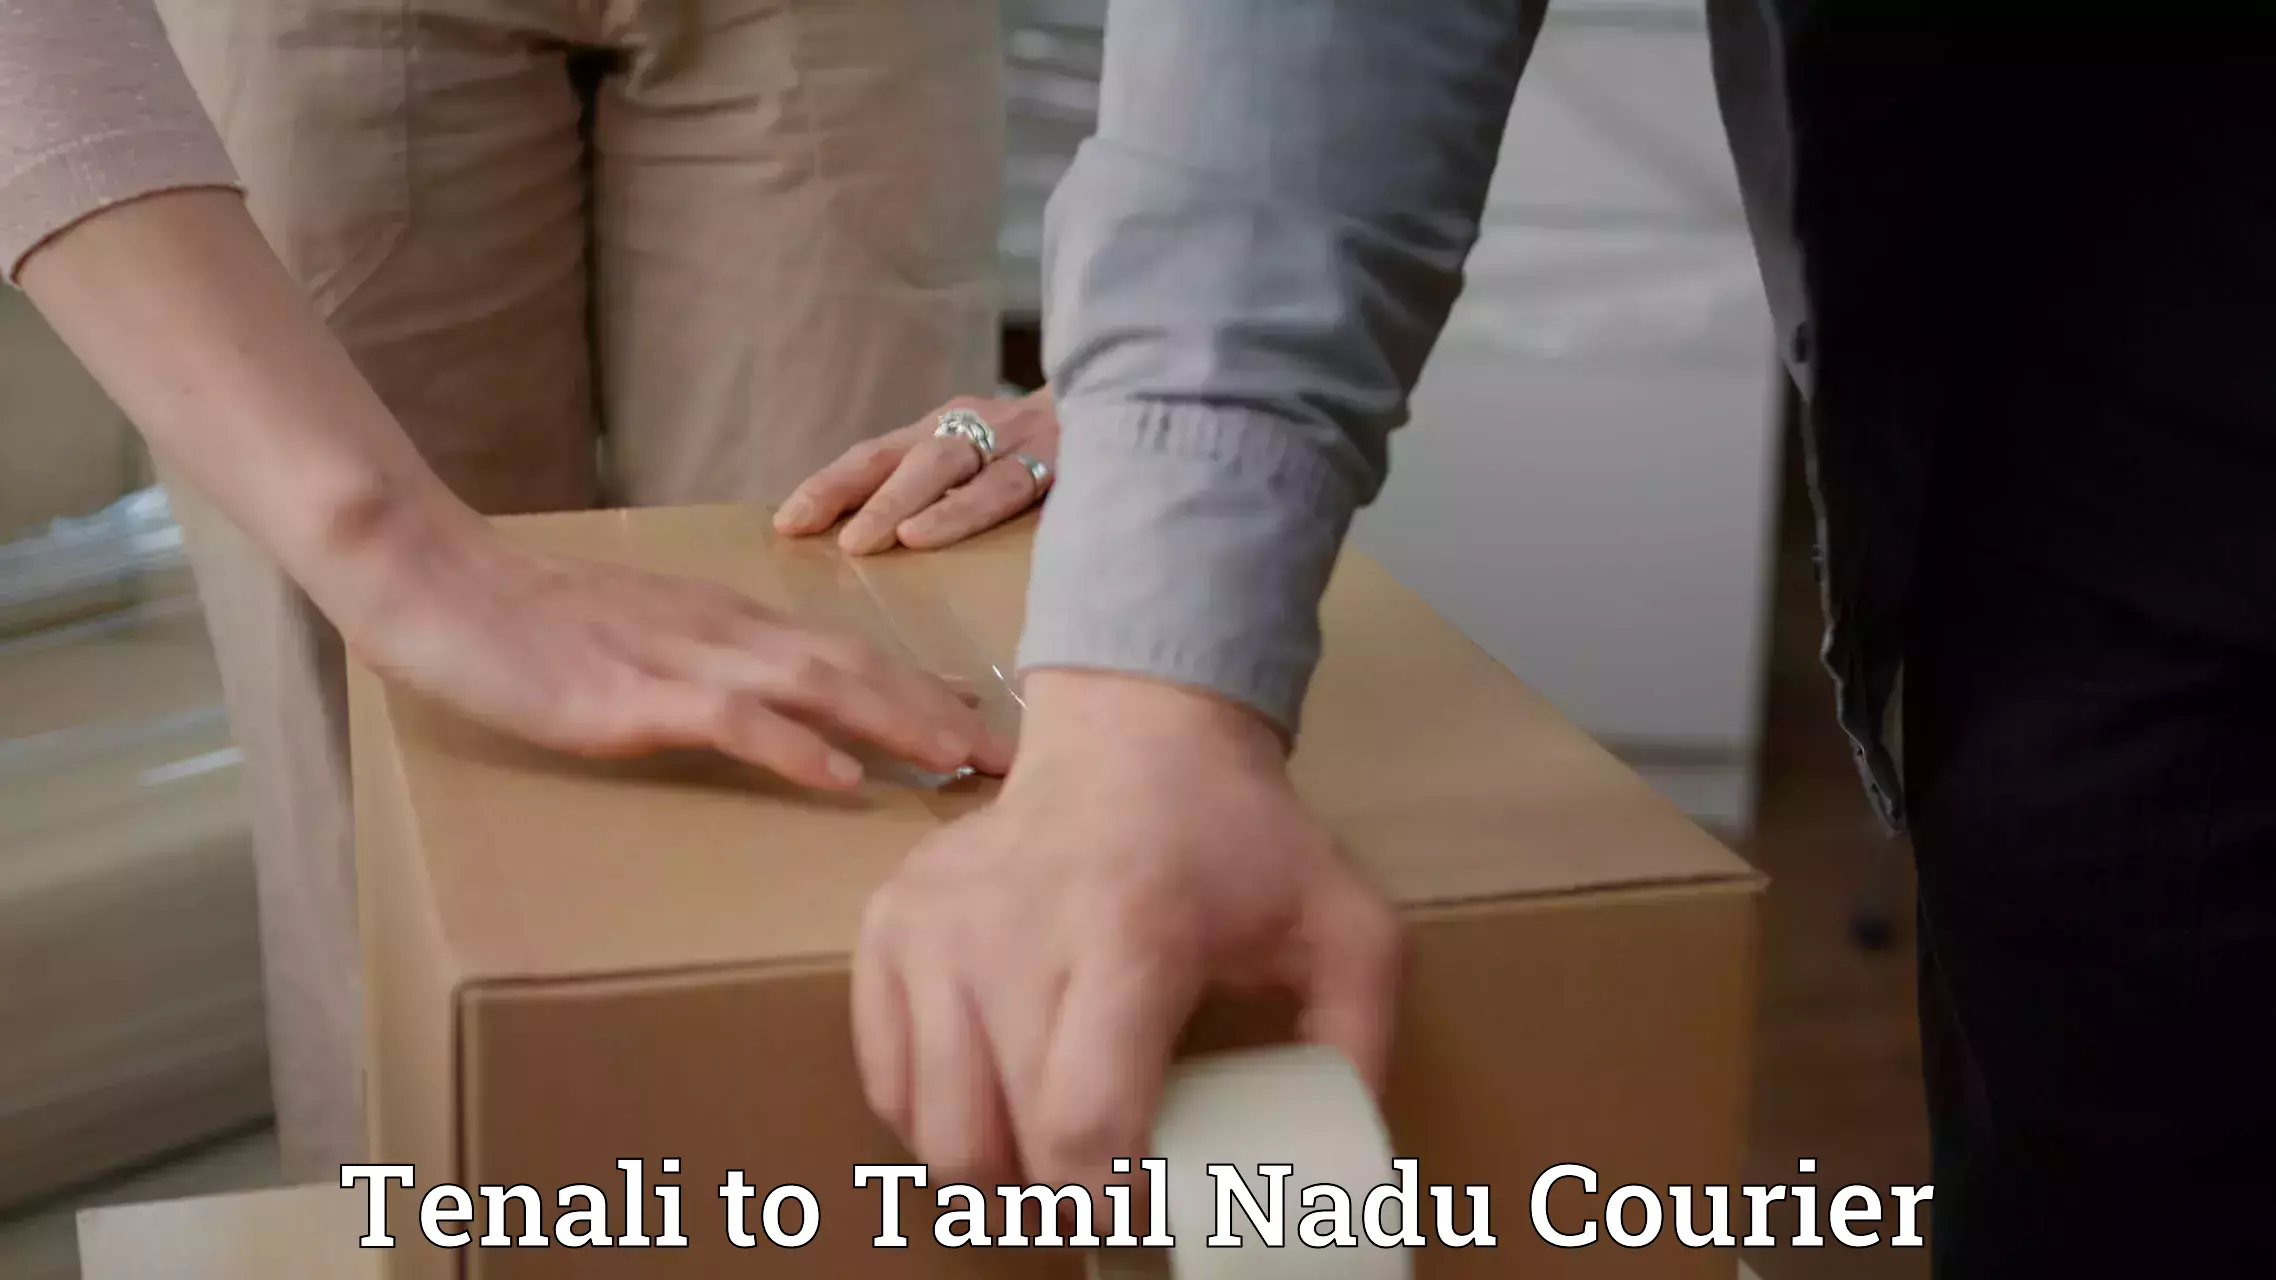 Same day luggage service Tenali to Tamil Nadu